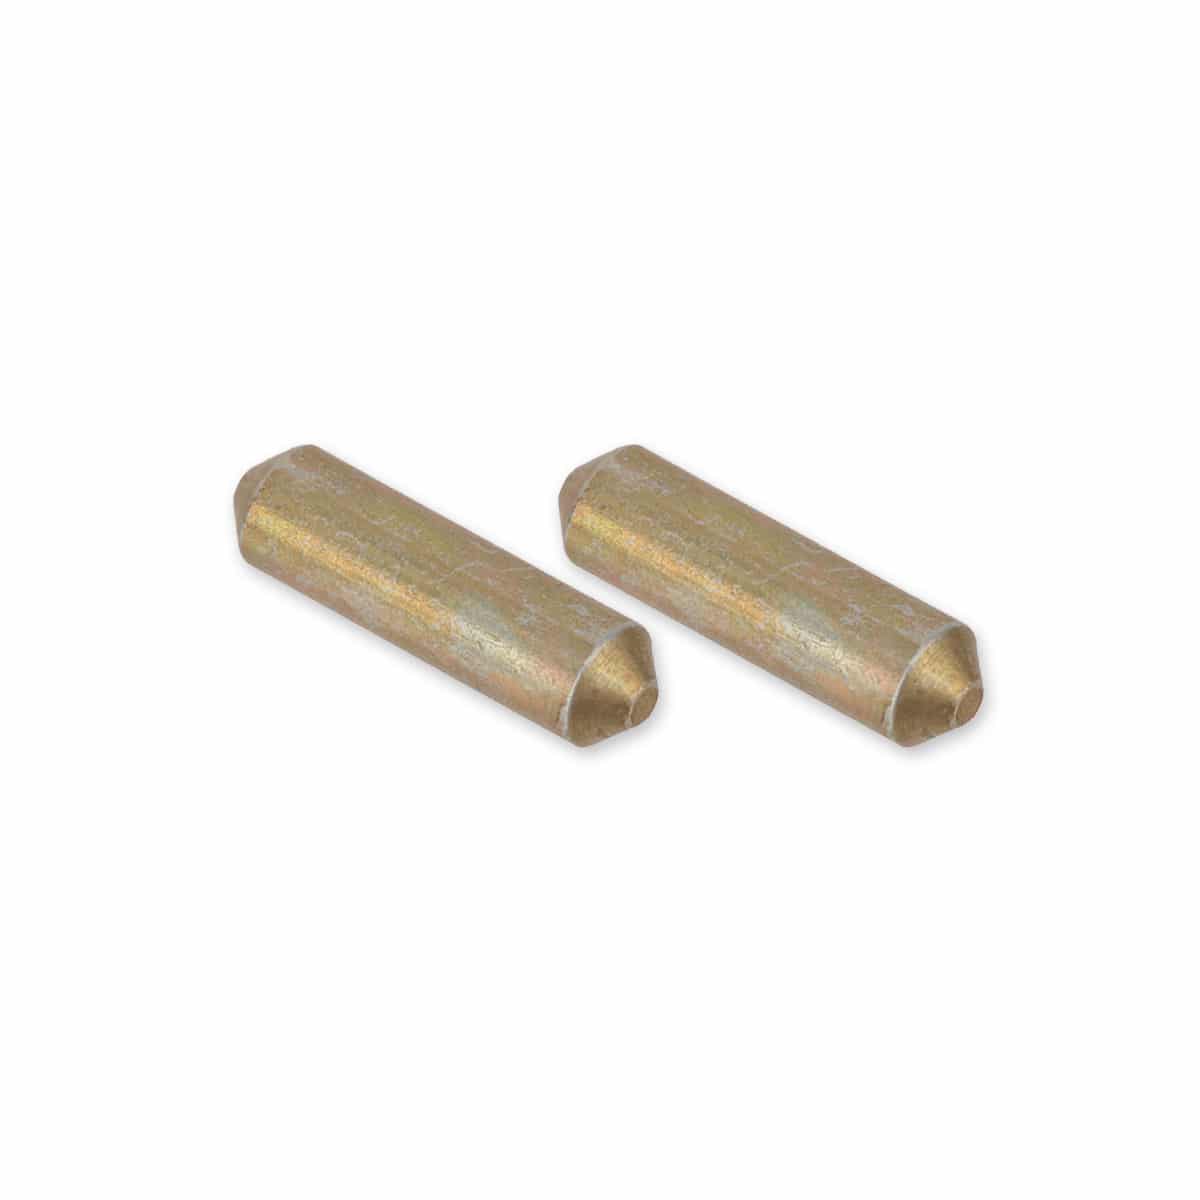 AT3™ Mil-Spec AR-15 Pivot Pin/Takedown Pin Detents - 2 or 10 Piece